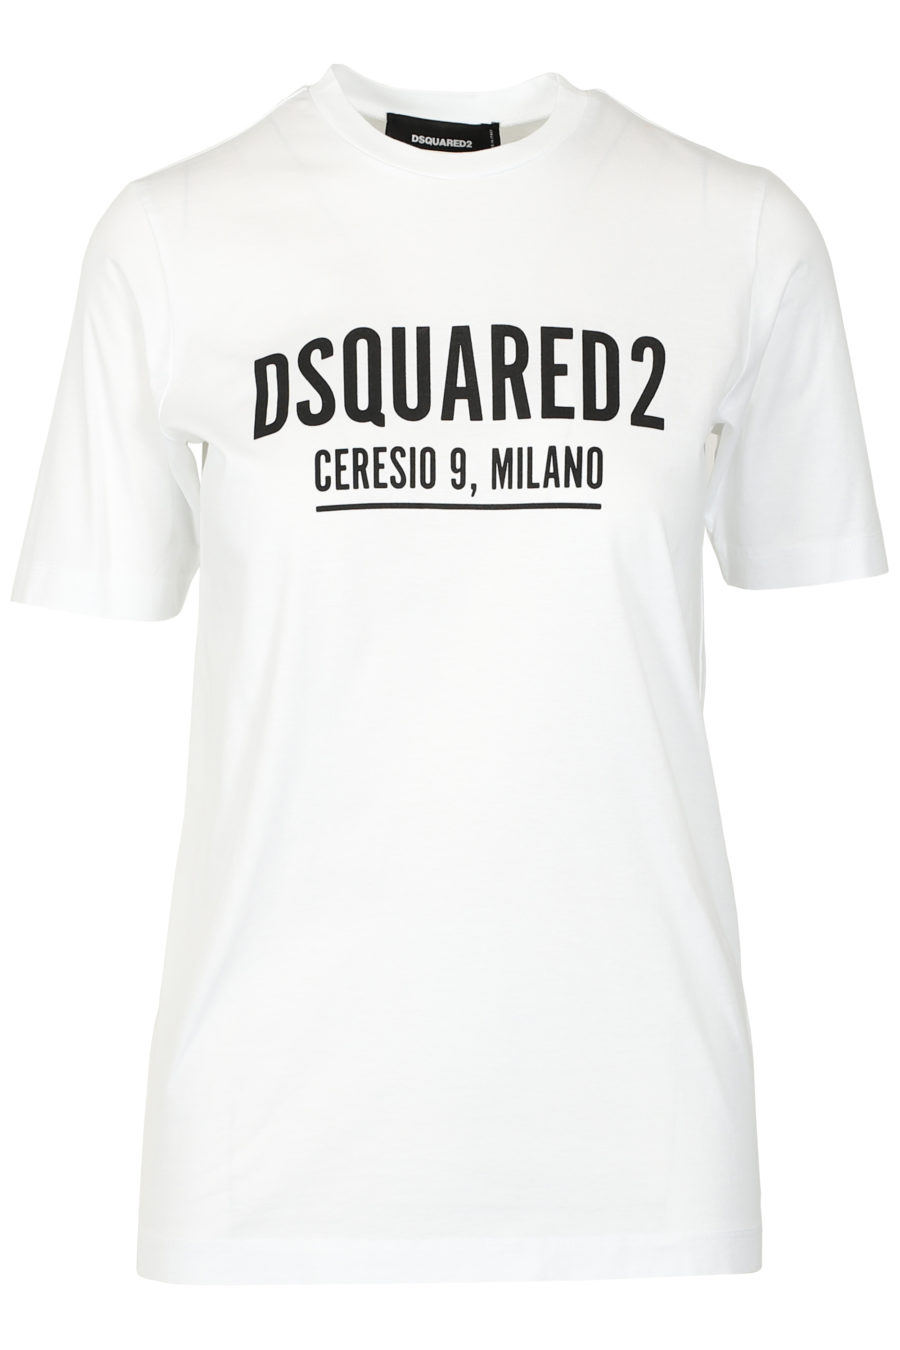 T-shirt blanc à manches courtes "Ceresio Milano" - IMG 3274